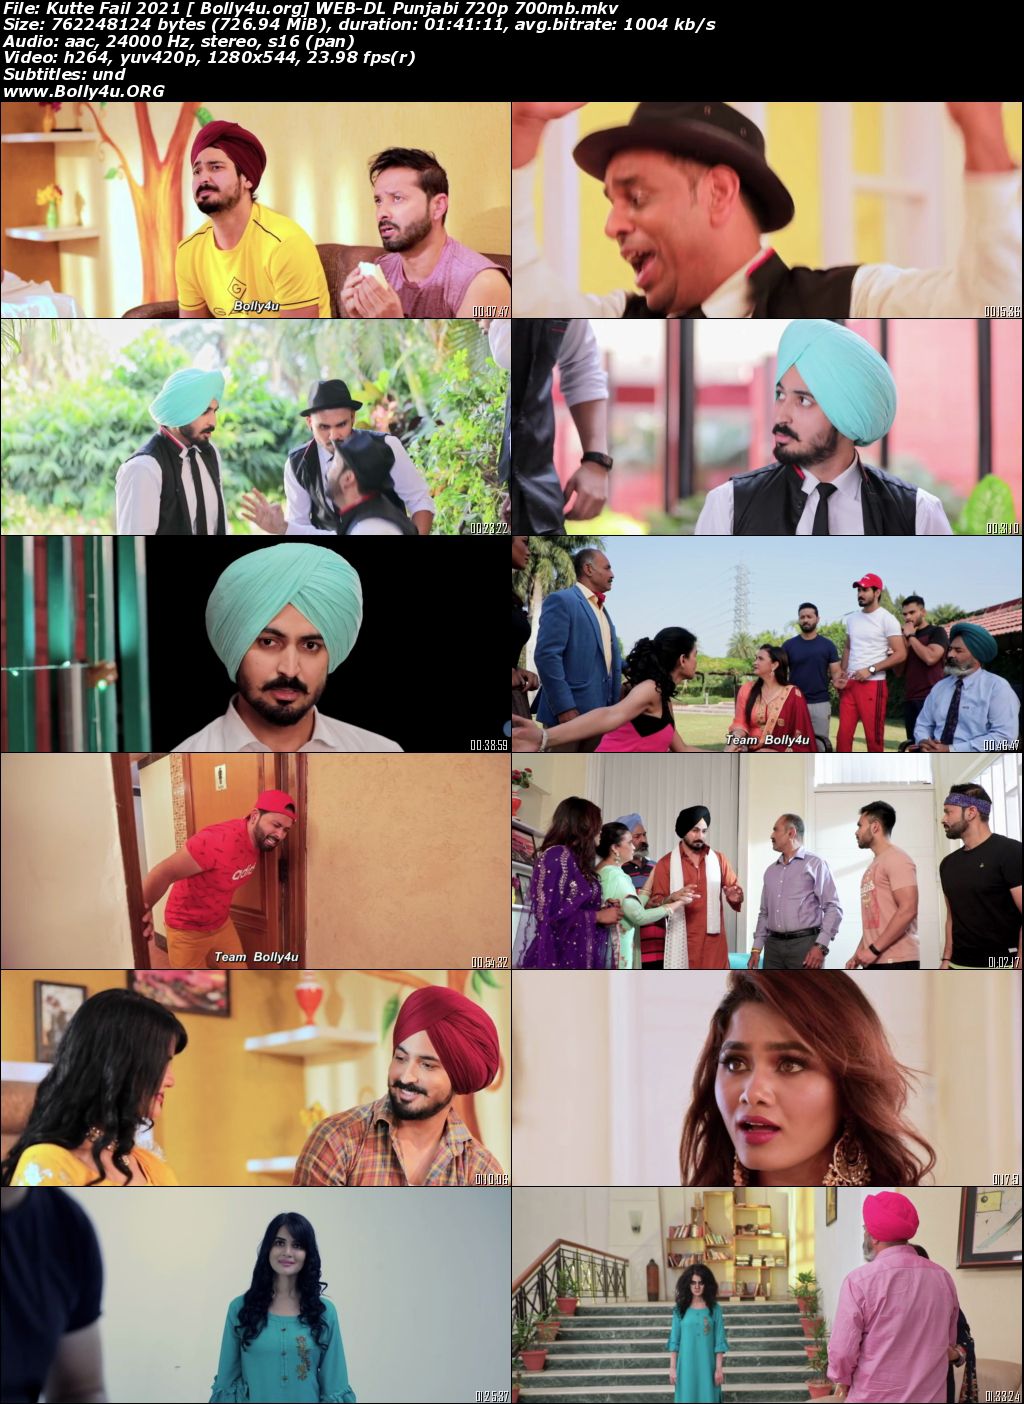 Kutte Fail 2021 WEB-DL 300Mb Punjabi Movie Download 480p